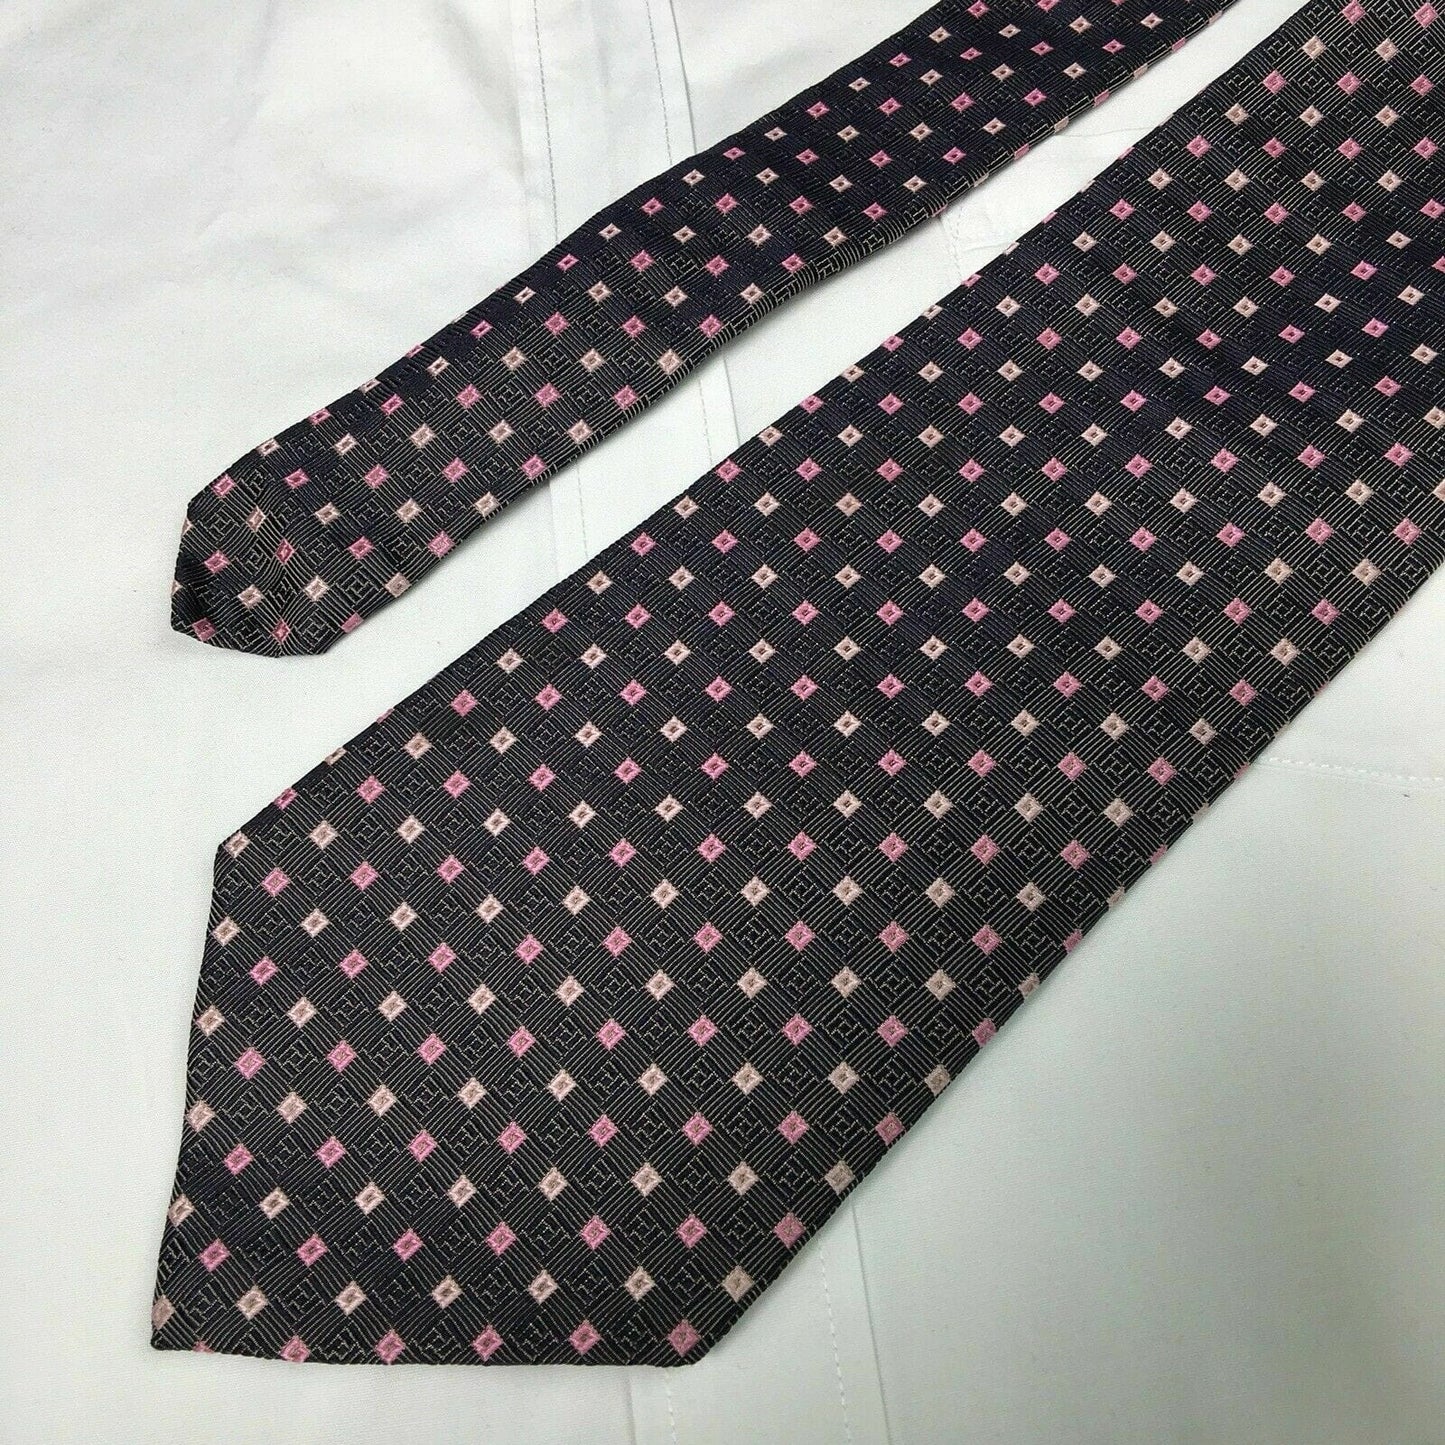 Sophisticated XMI Classic Mens Black Pink Square Pattern Italian Silk Neck Tie - Very Good